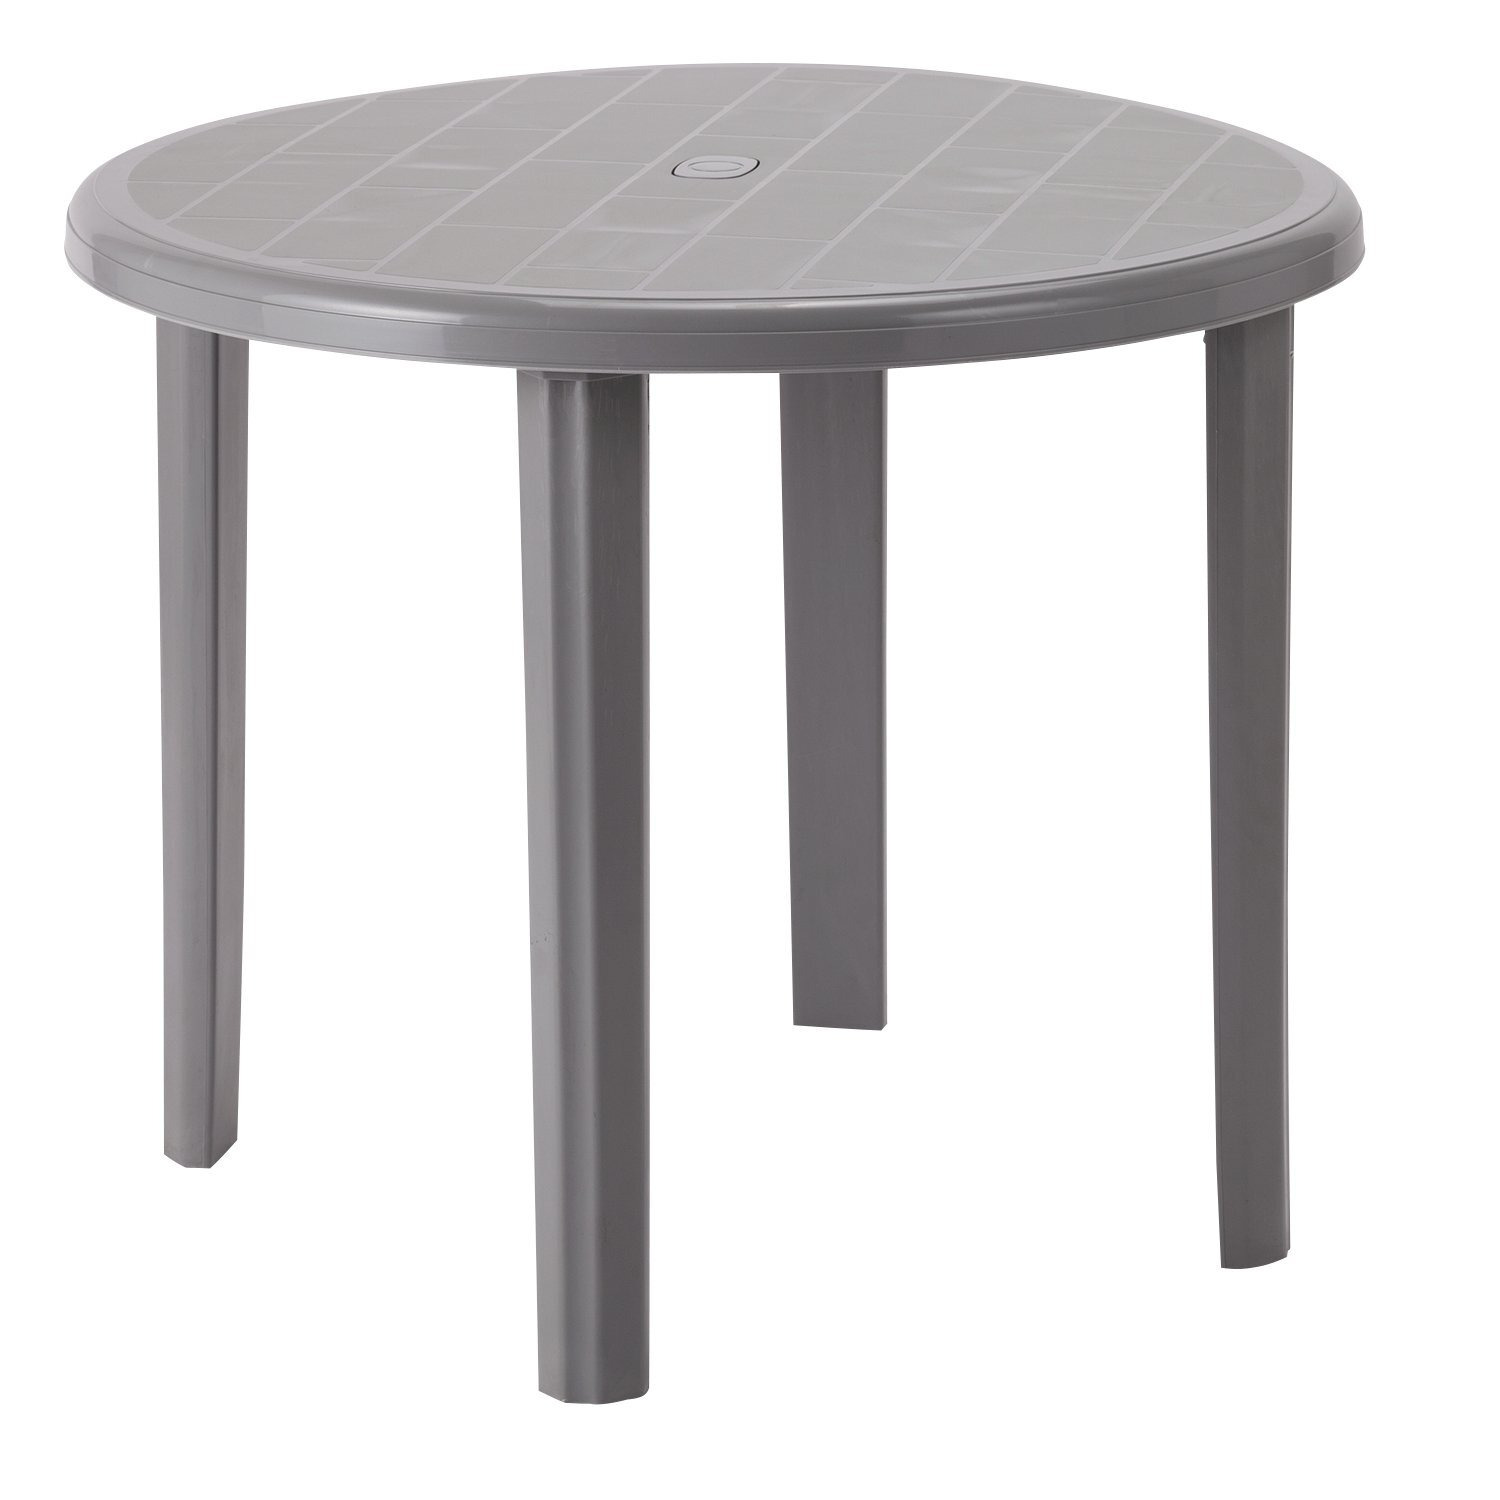 Argos Home 4 Seater Round Plastic Garden Table - Grey - image 1